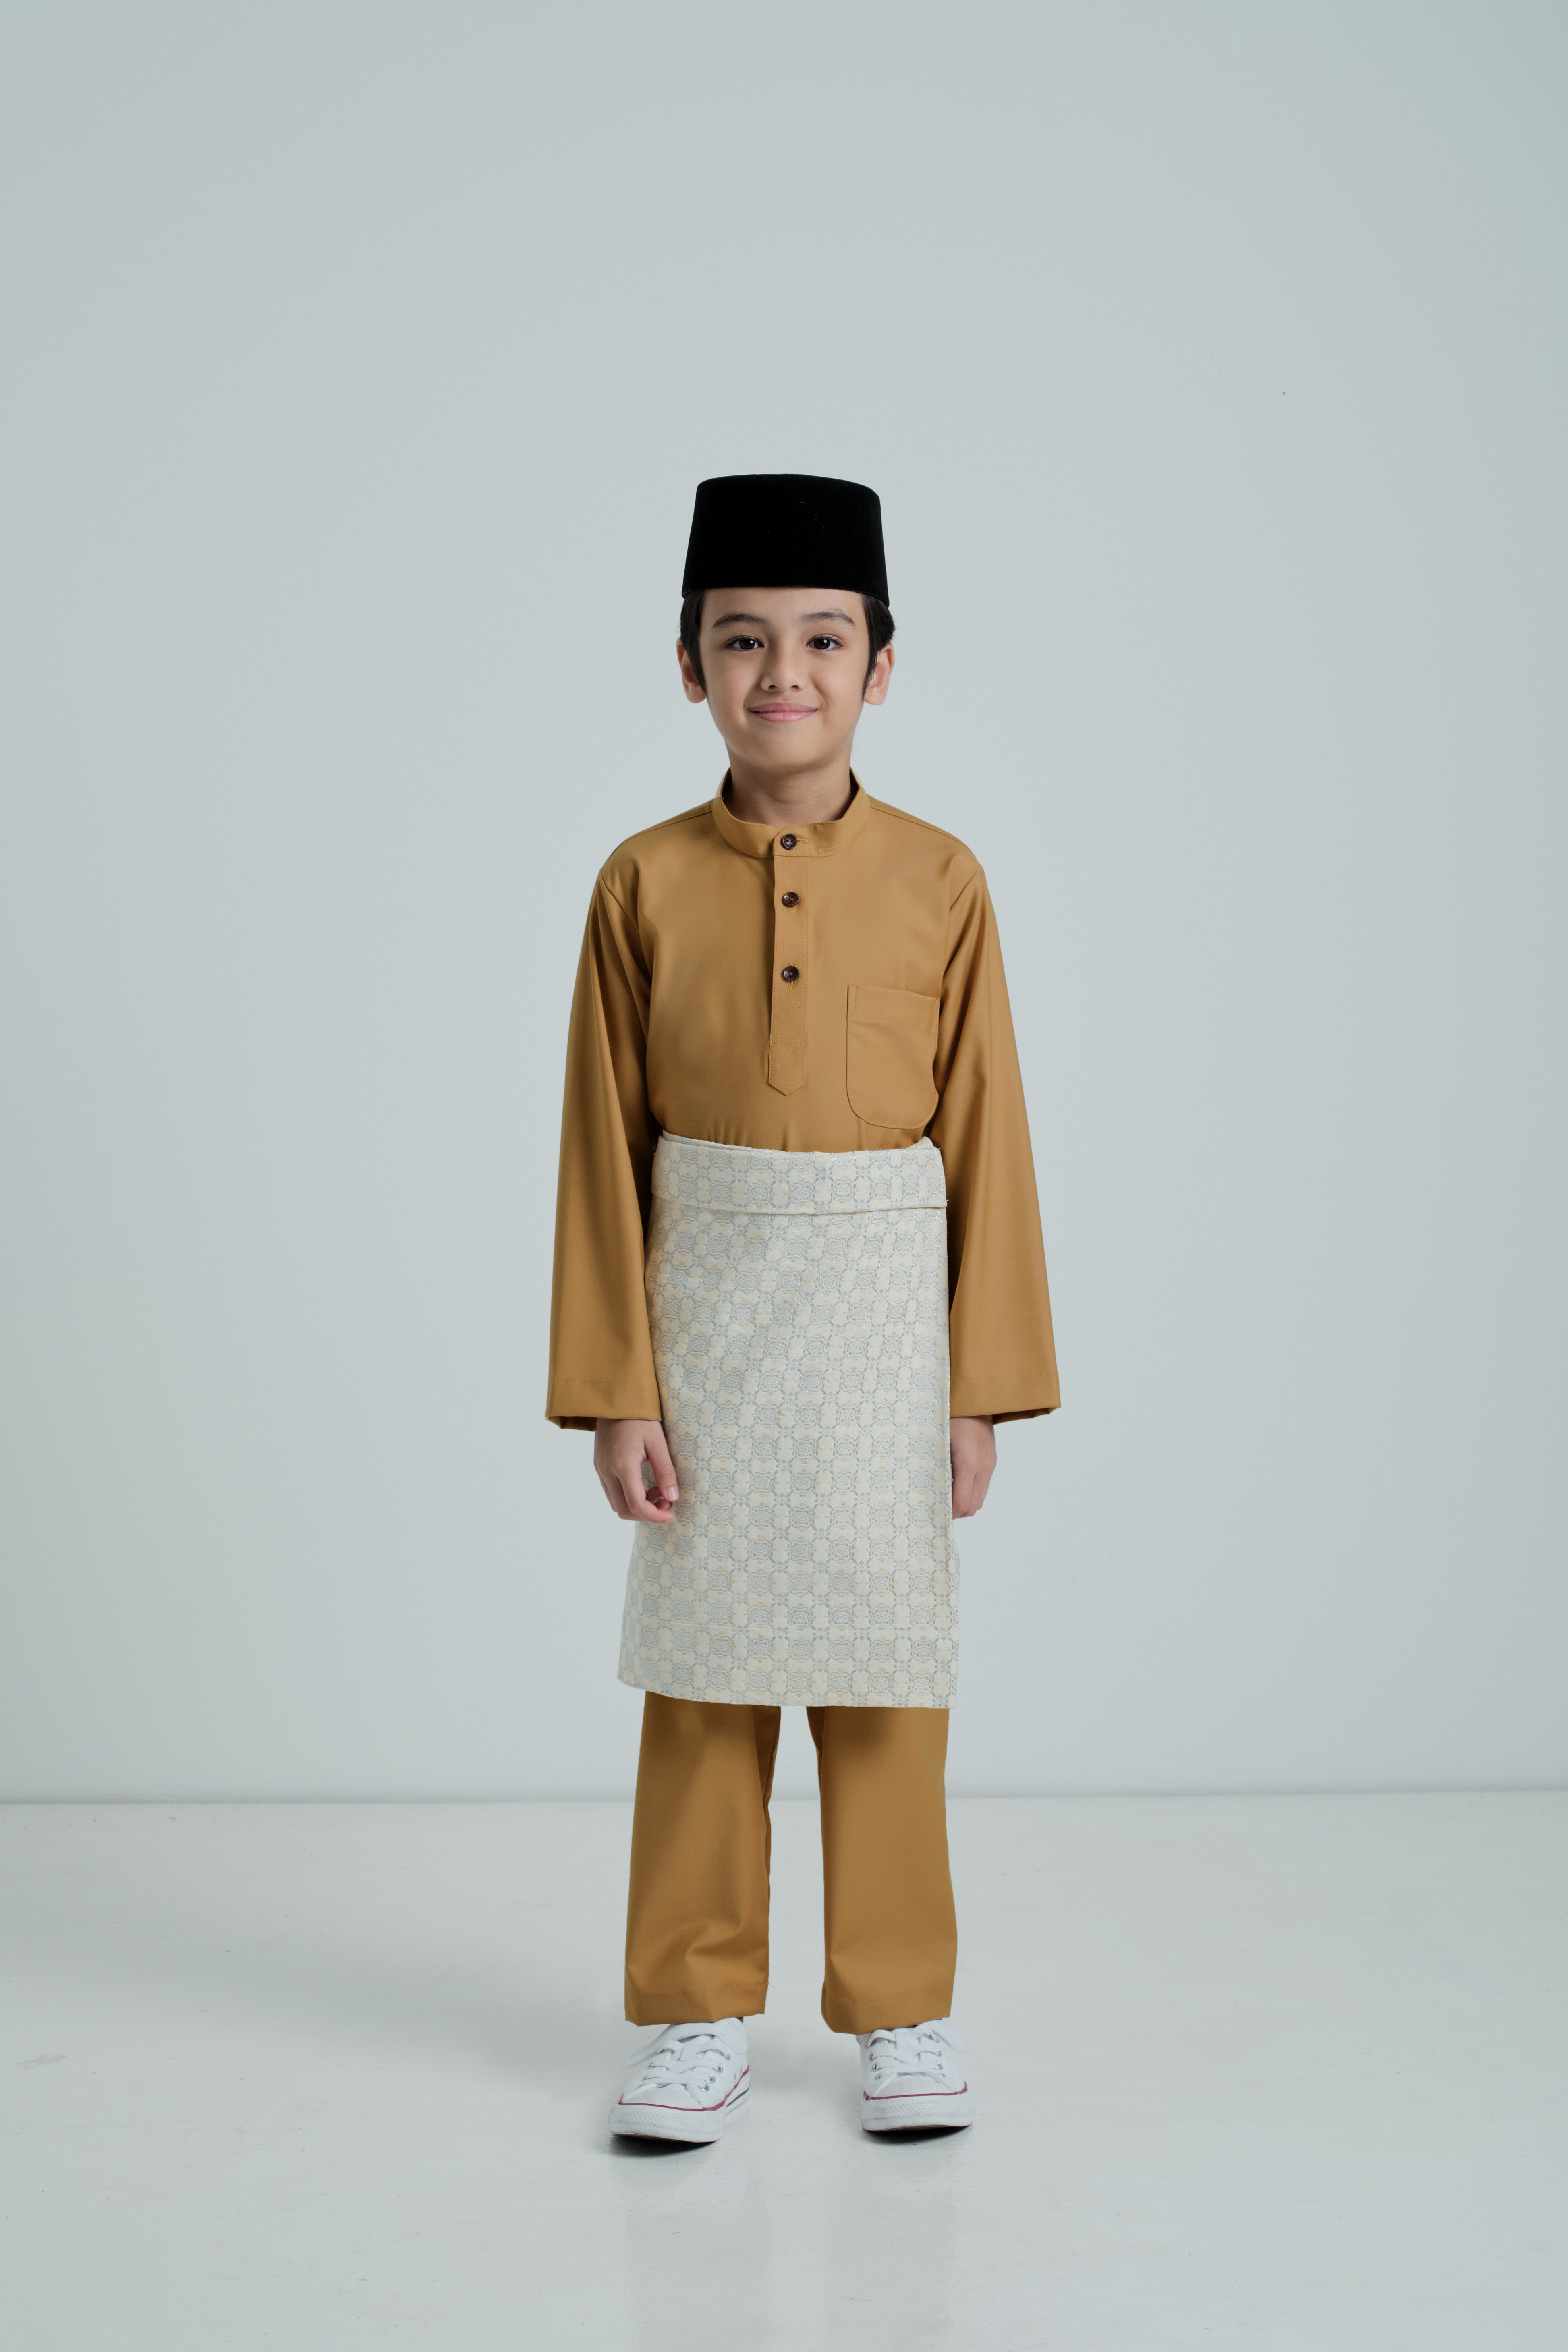 Patawali Boys Baju Melayu Cekak Musang - Mustard Brown